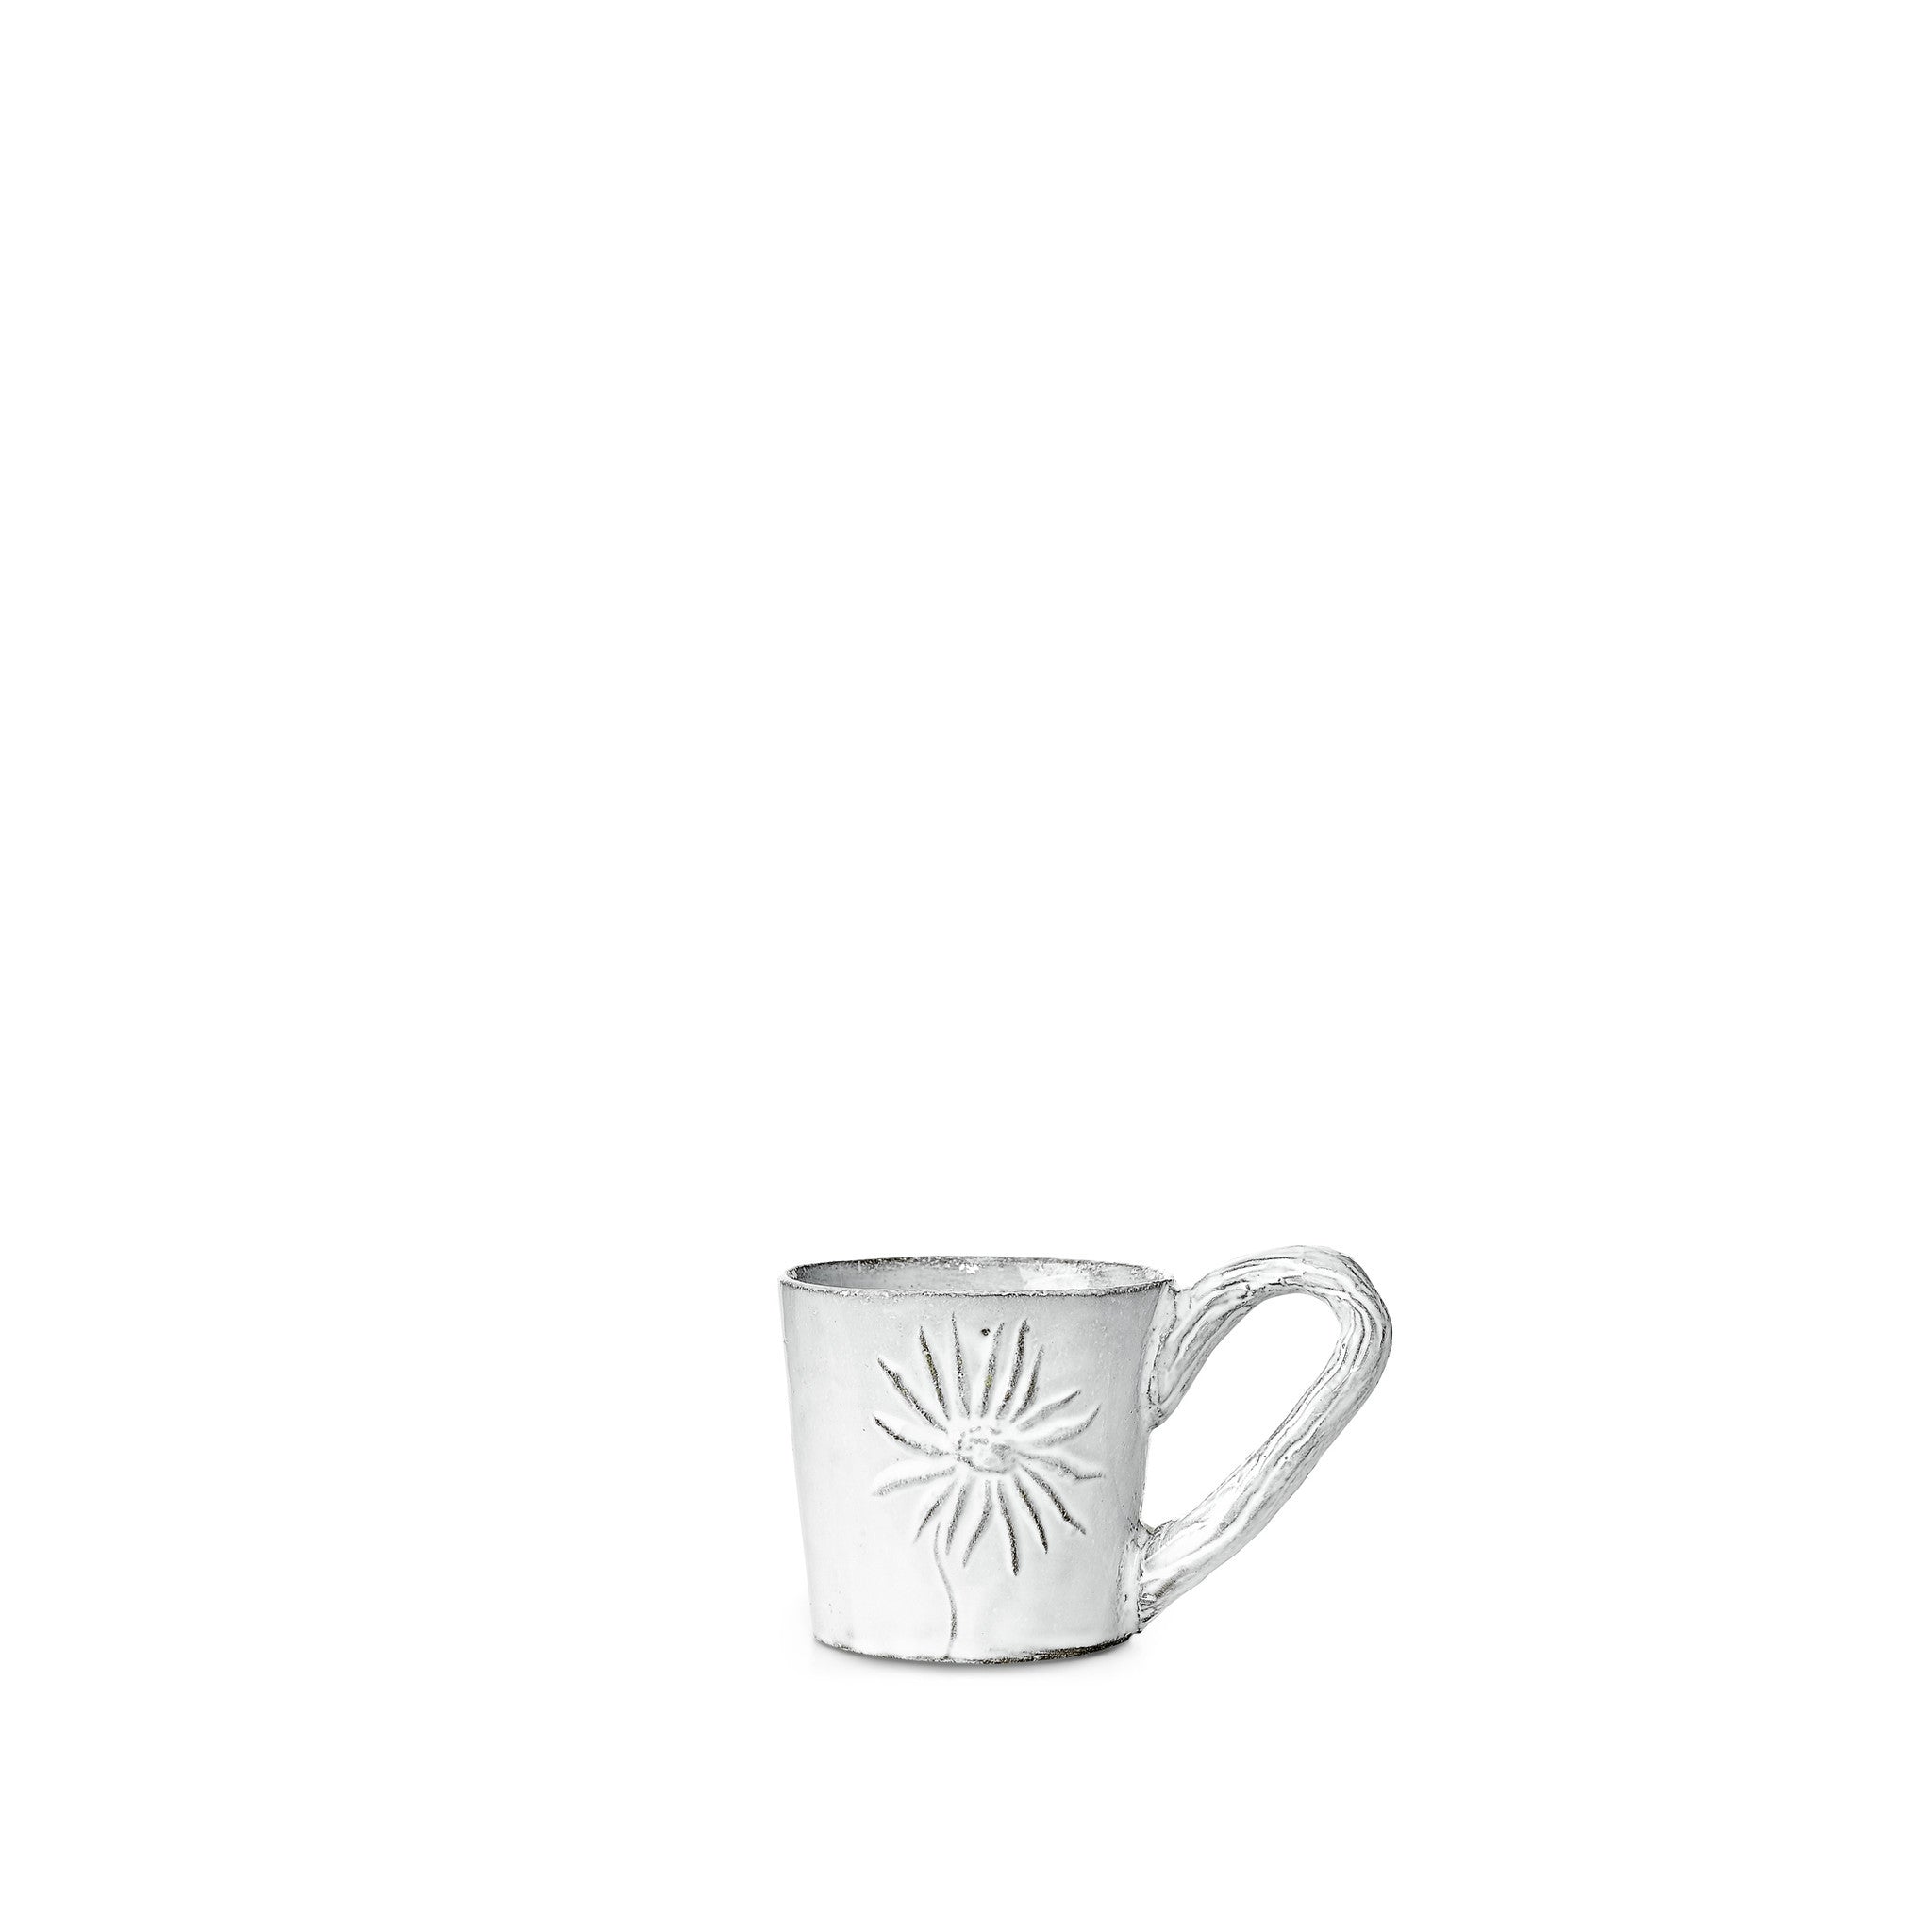 Fleurs Coffee Cup with Small Handle by Astier de Villatte, 9.5cm